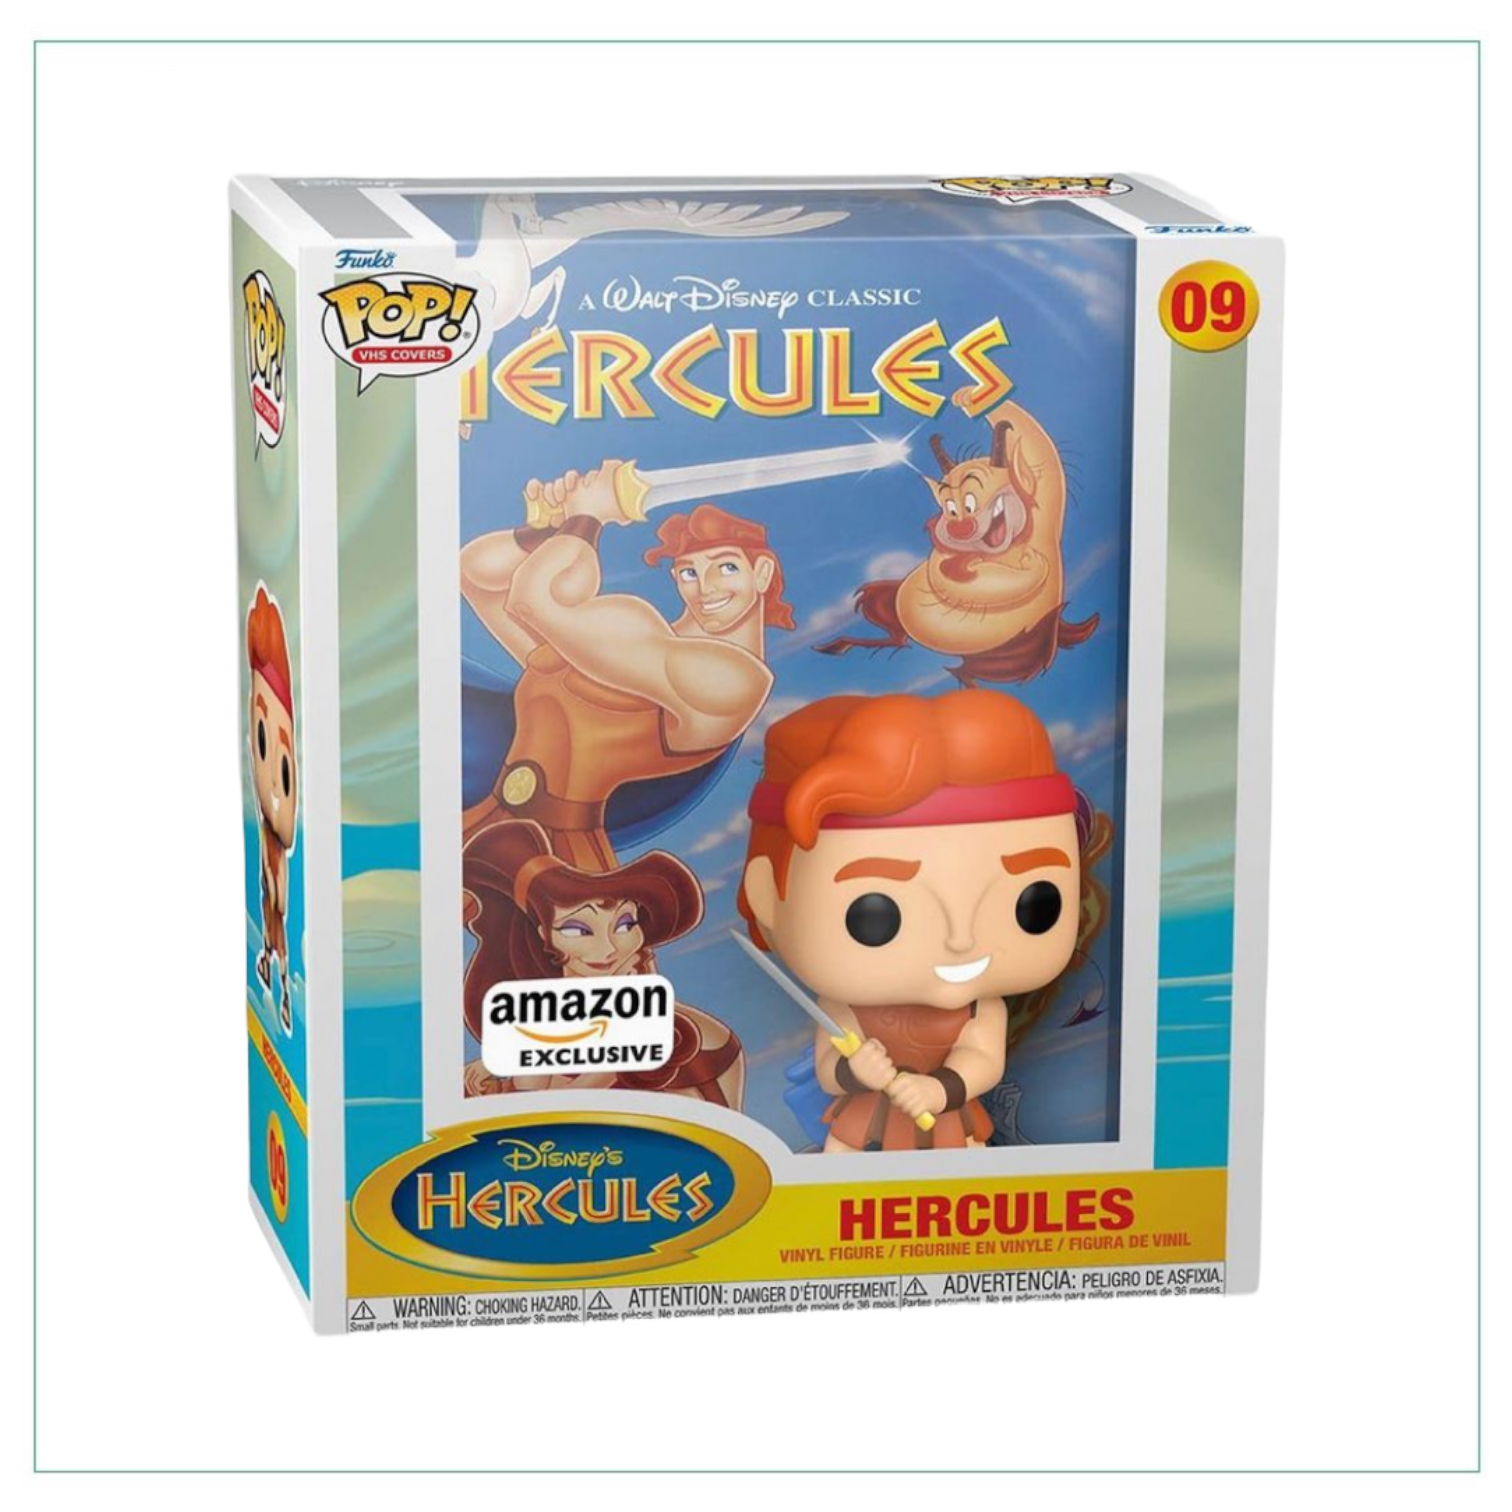 Hercules #09 Funko Pop! VHS Cover Hercules - Amazon Exclusive